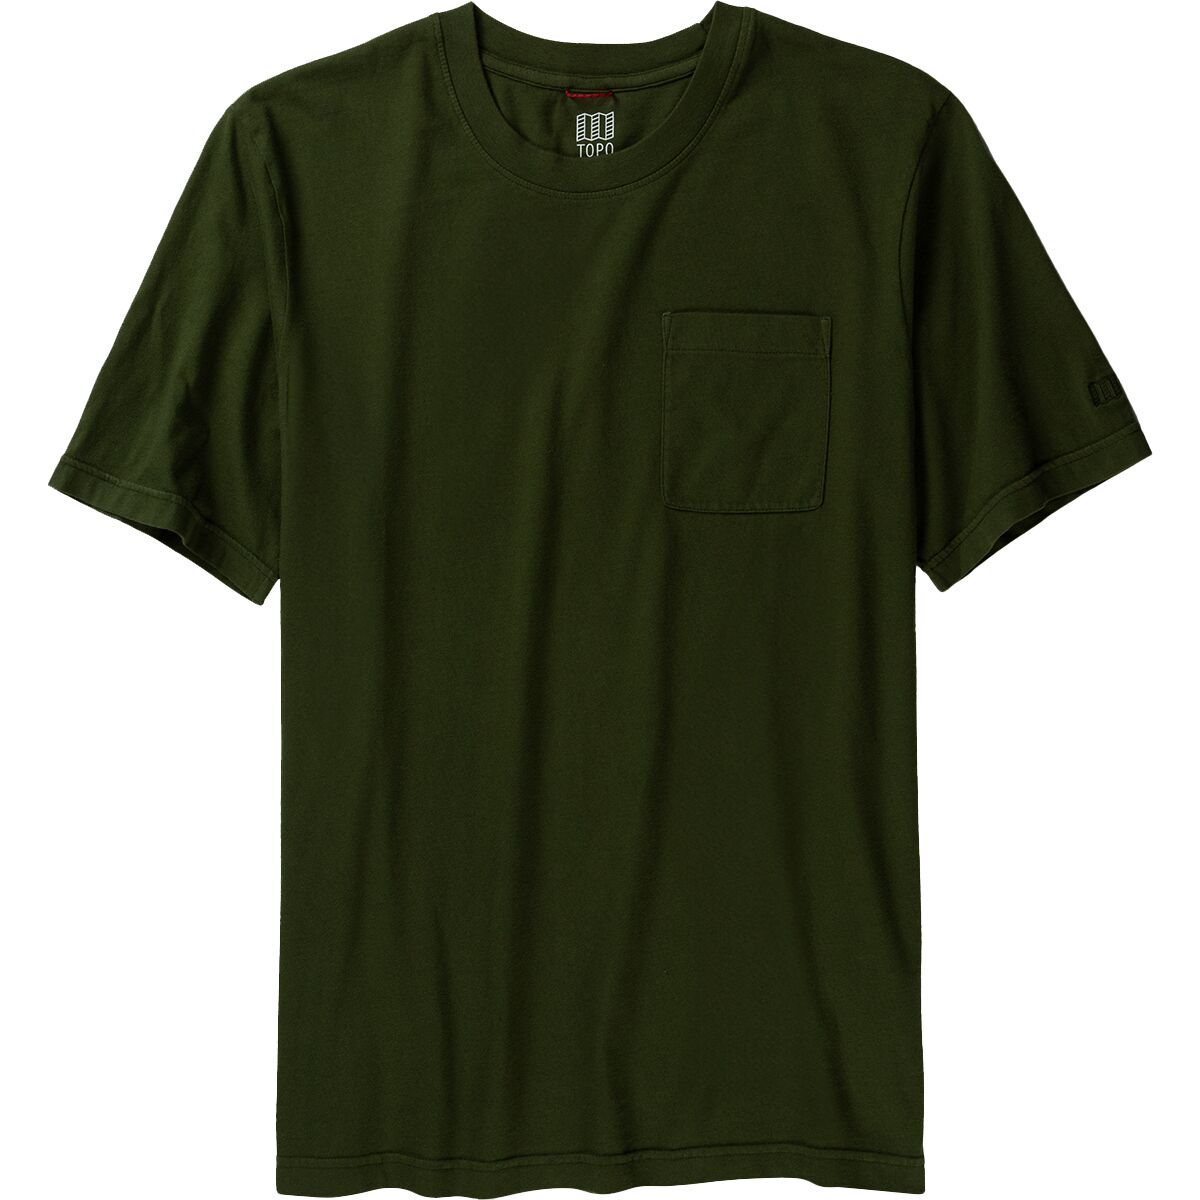 Dirt Pocket Short-Sleeve T-Shirt - Men